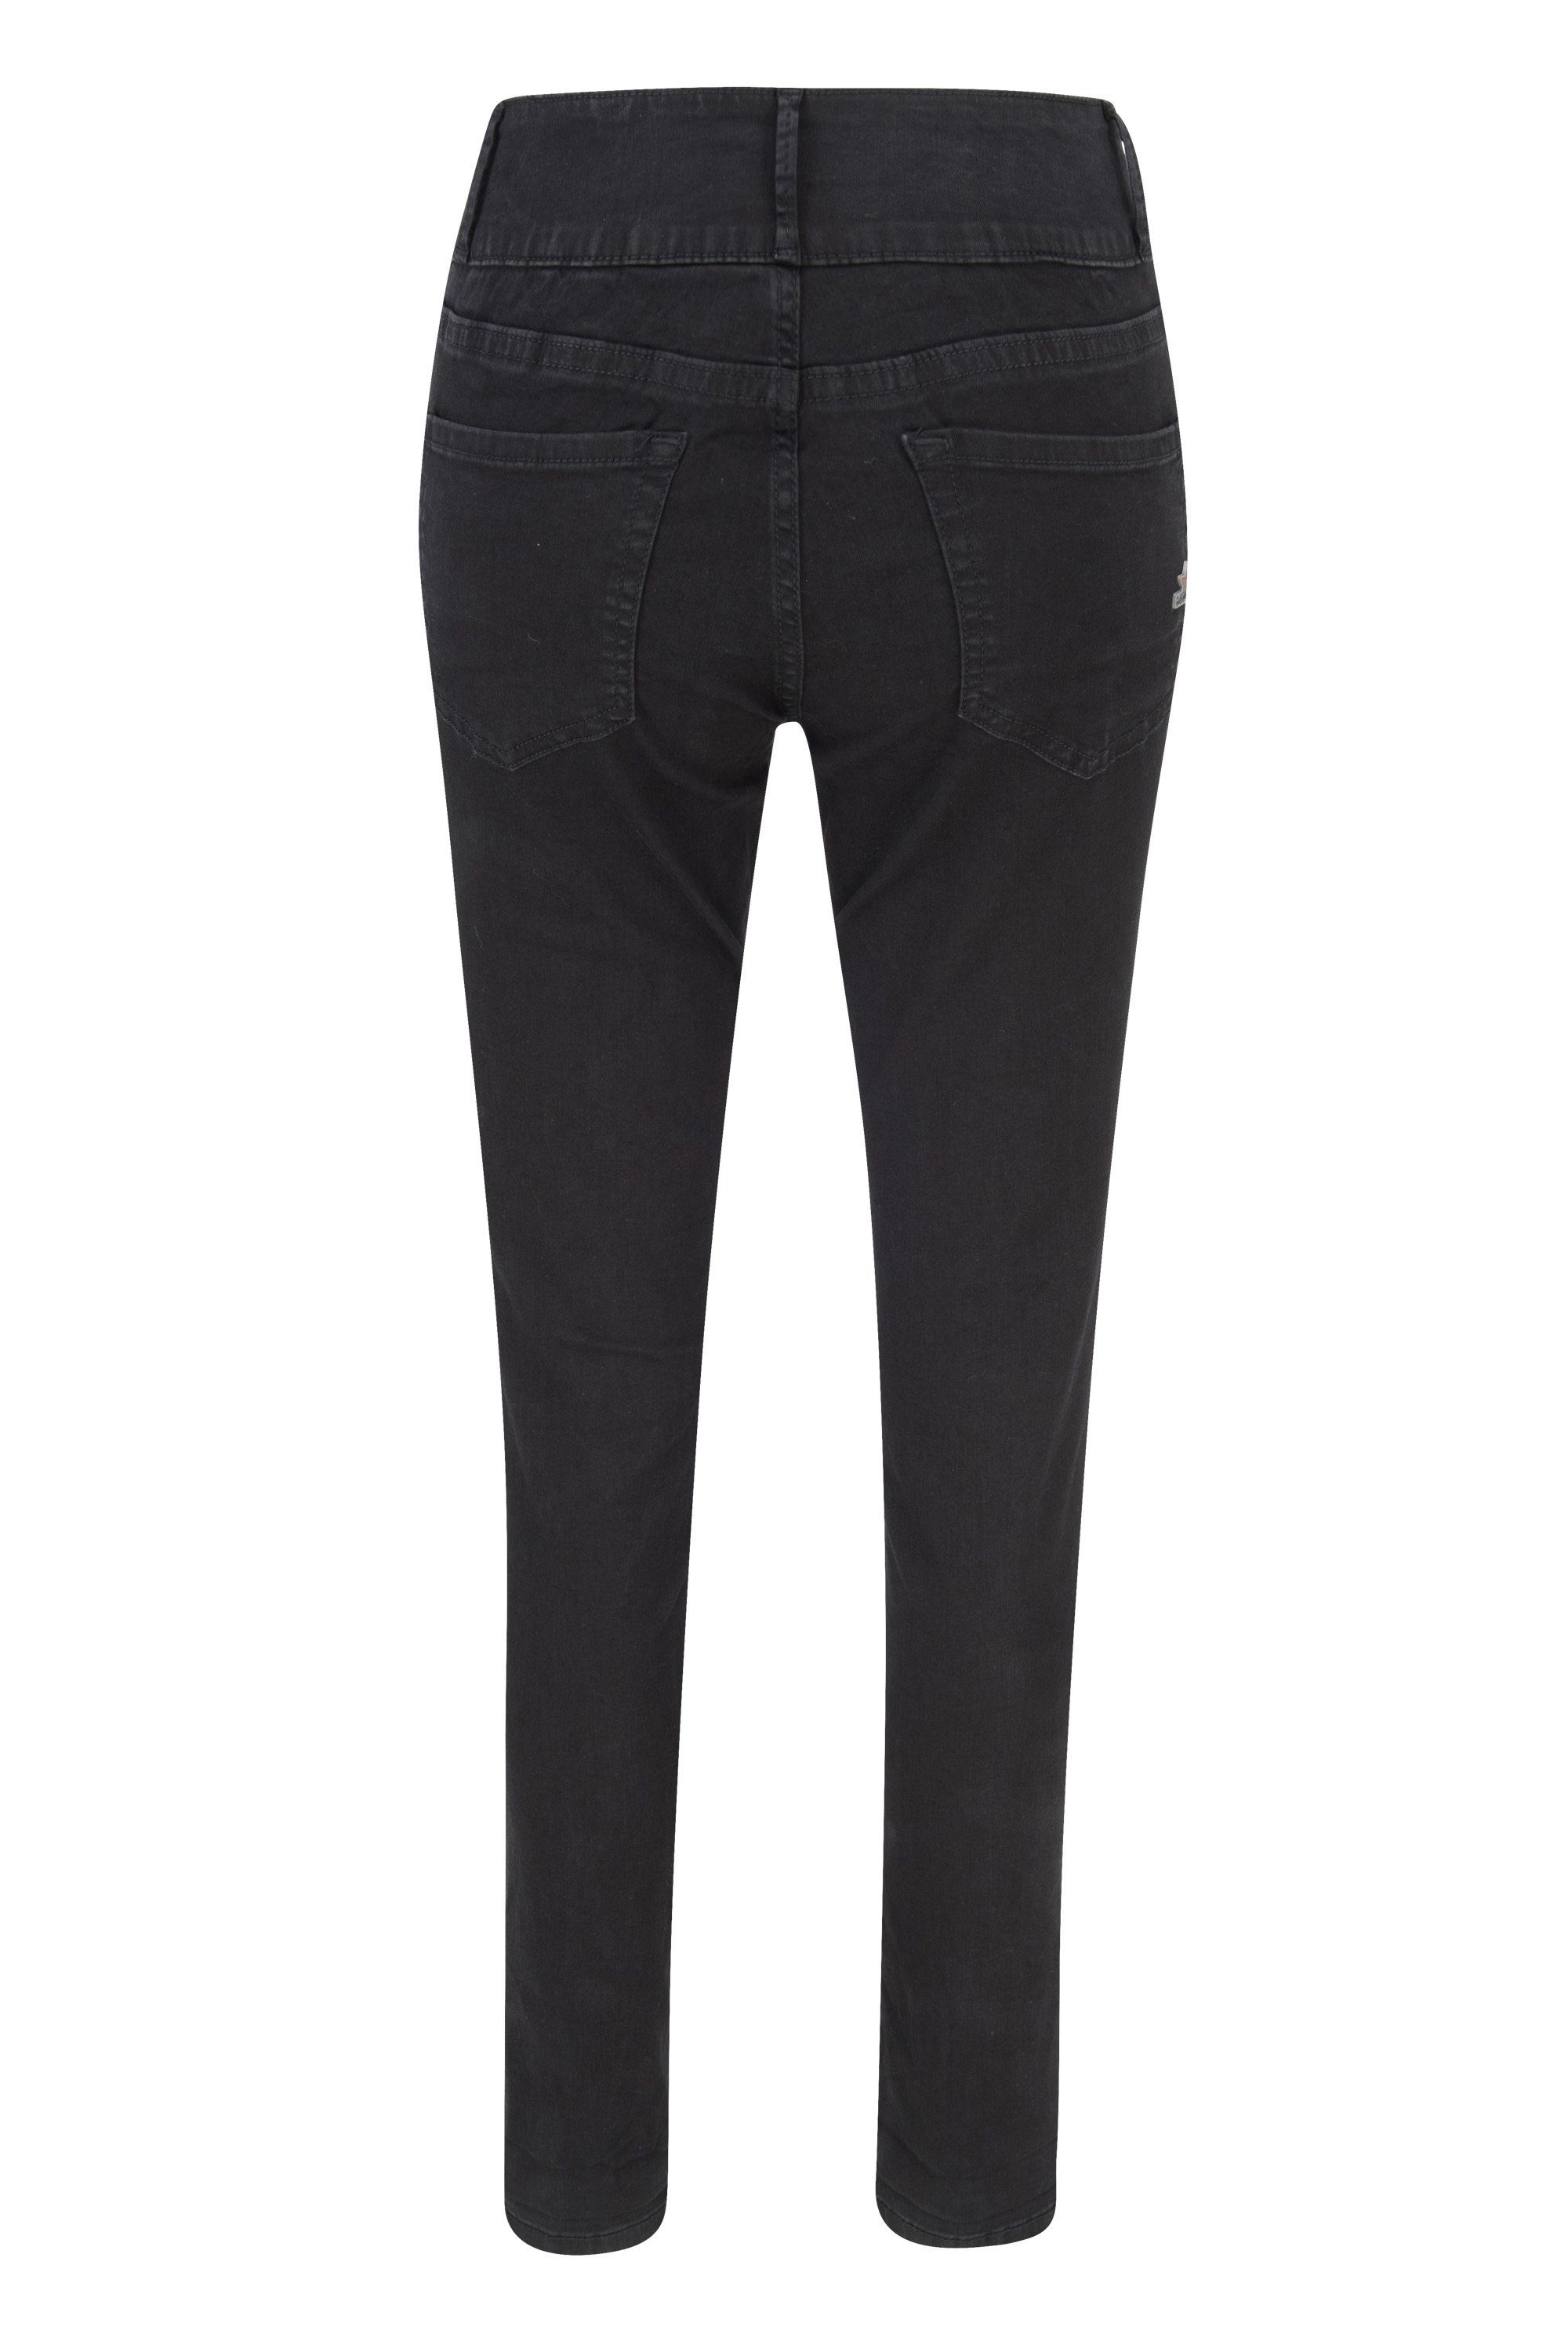 5-Pocket-Jeans black Vista Buena Twill, Tummyless Stretch